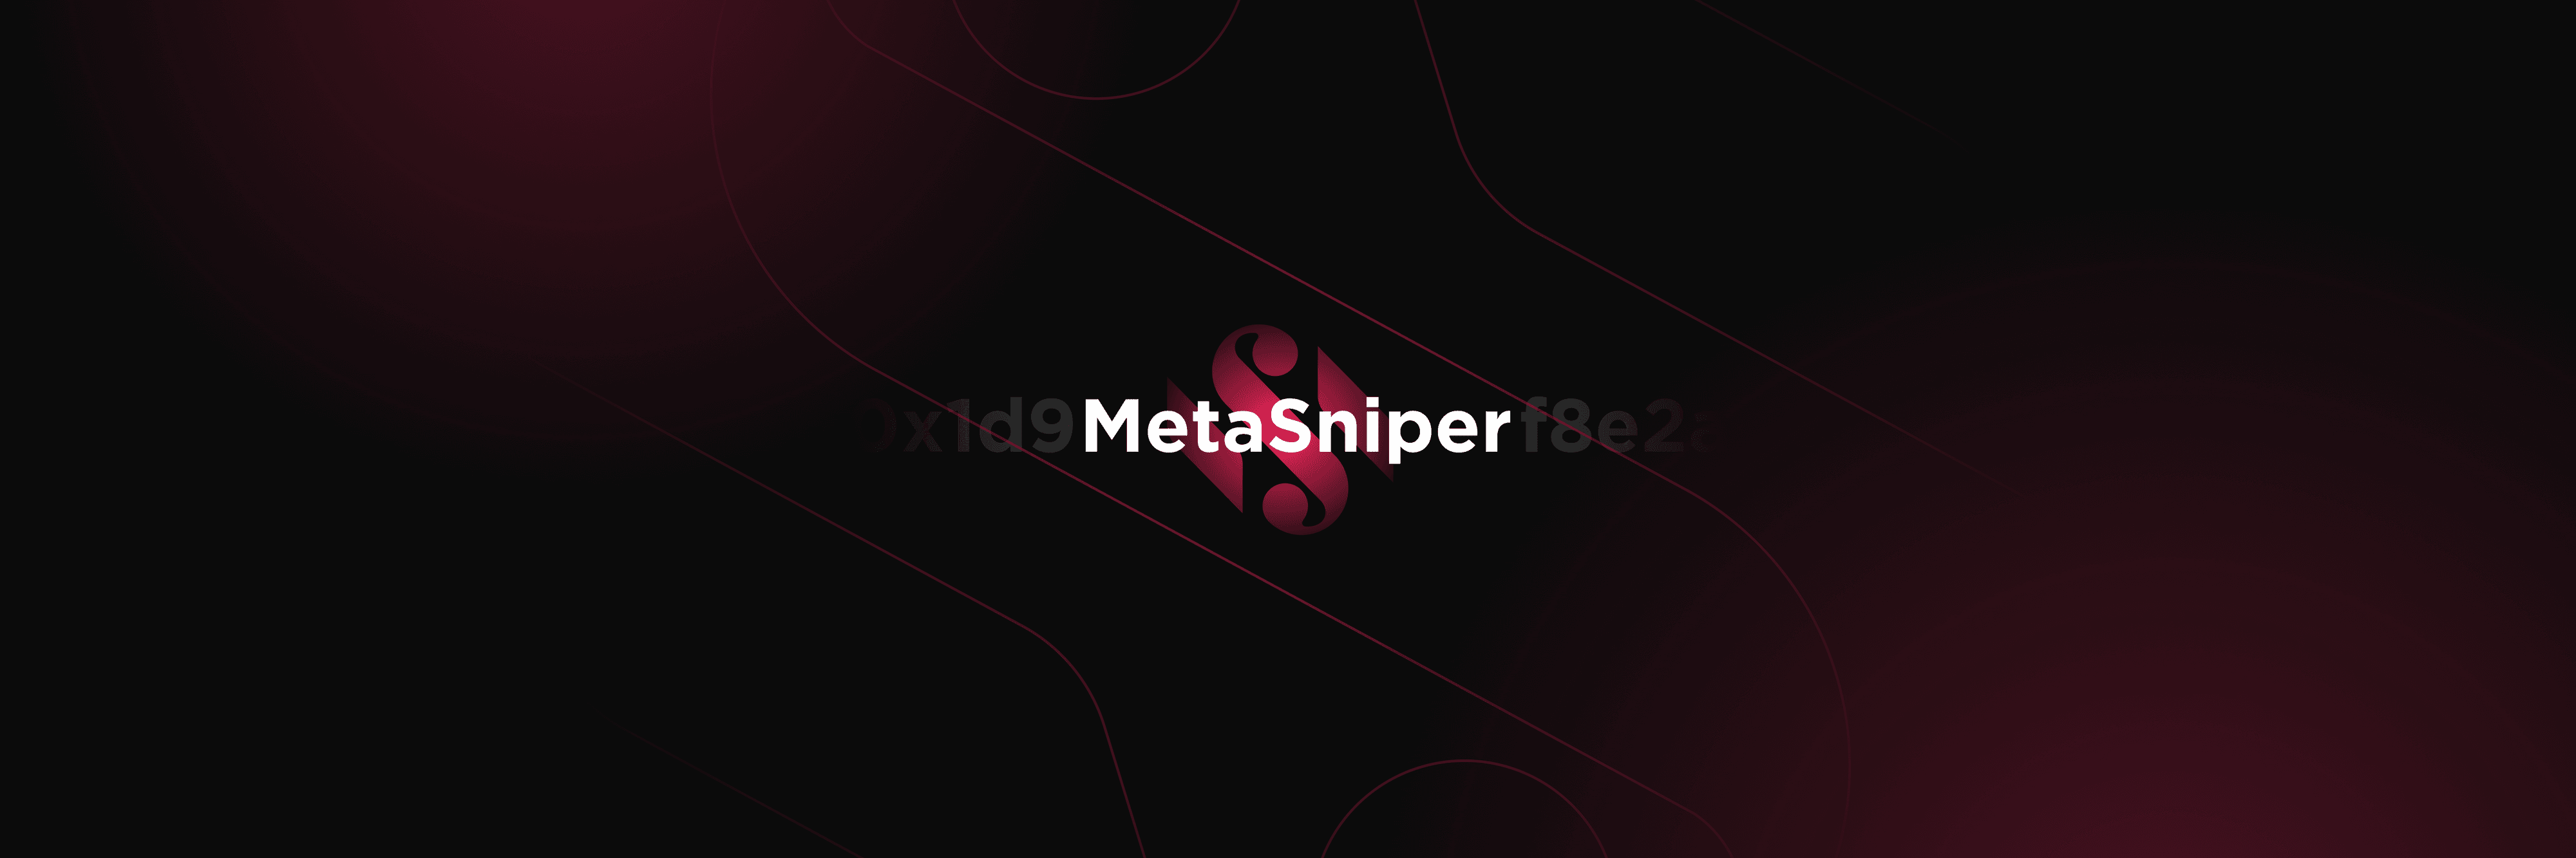 MetaSniper-Deployer 横幅